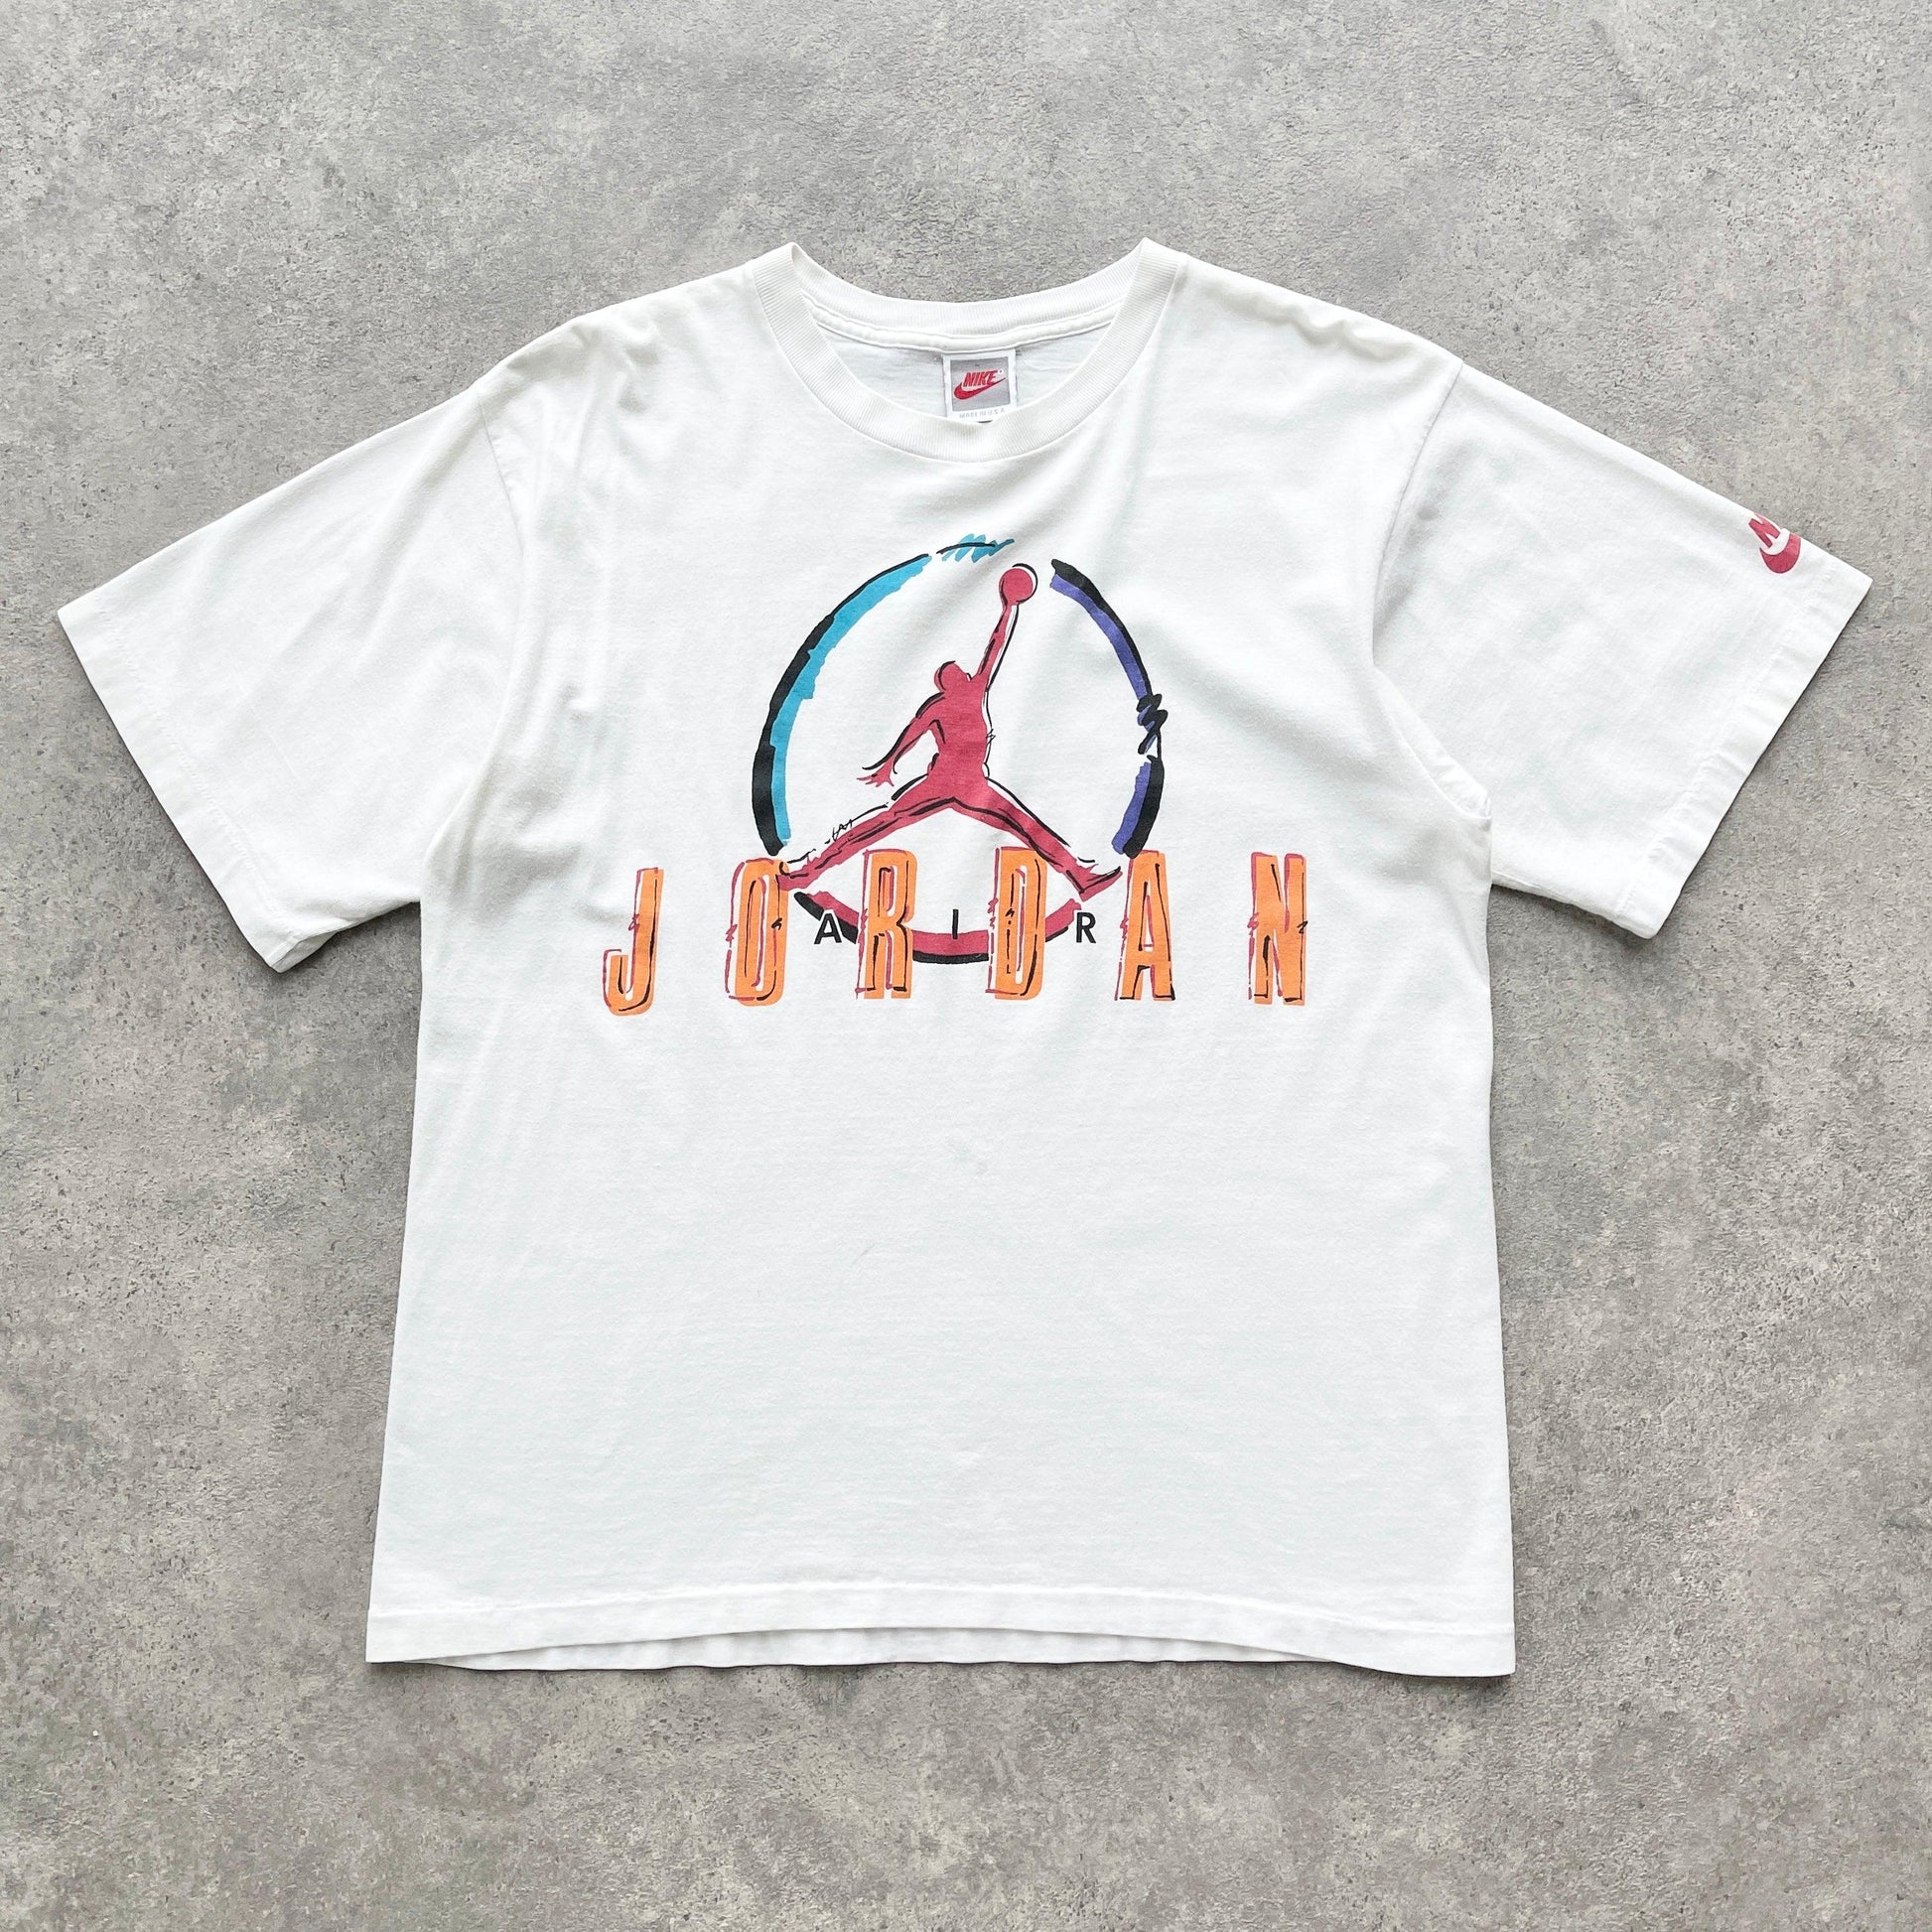 Nike 1990s Air Jordan graphic single stitch t-shirt (S) - Known Source